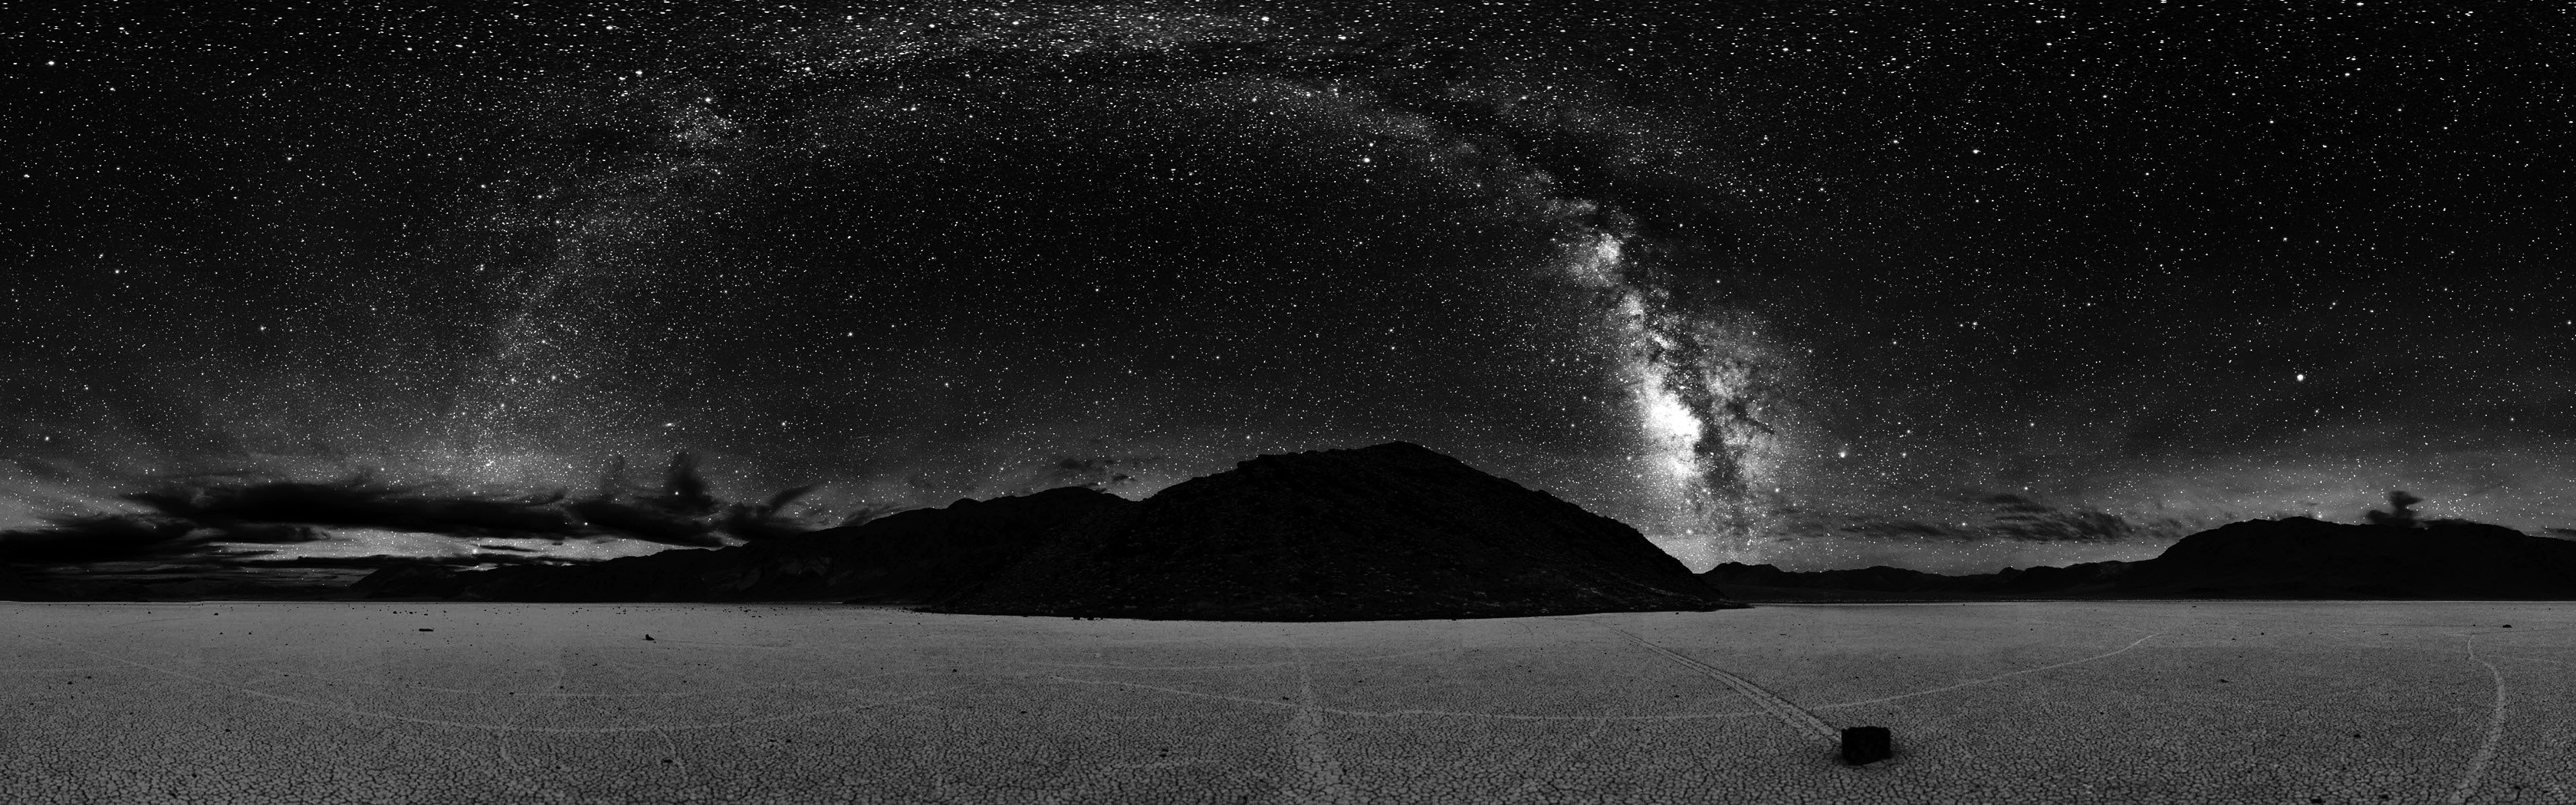 General 3360x1050 landscape night stars Milky Way panorama nature monochrome